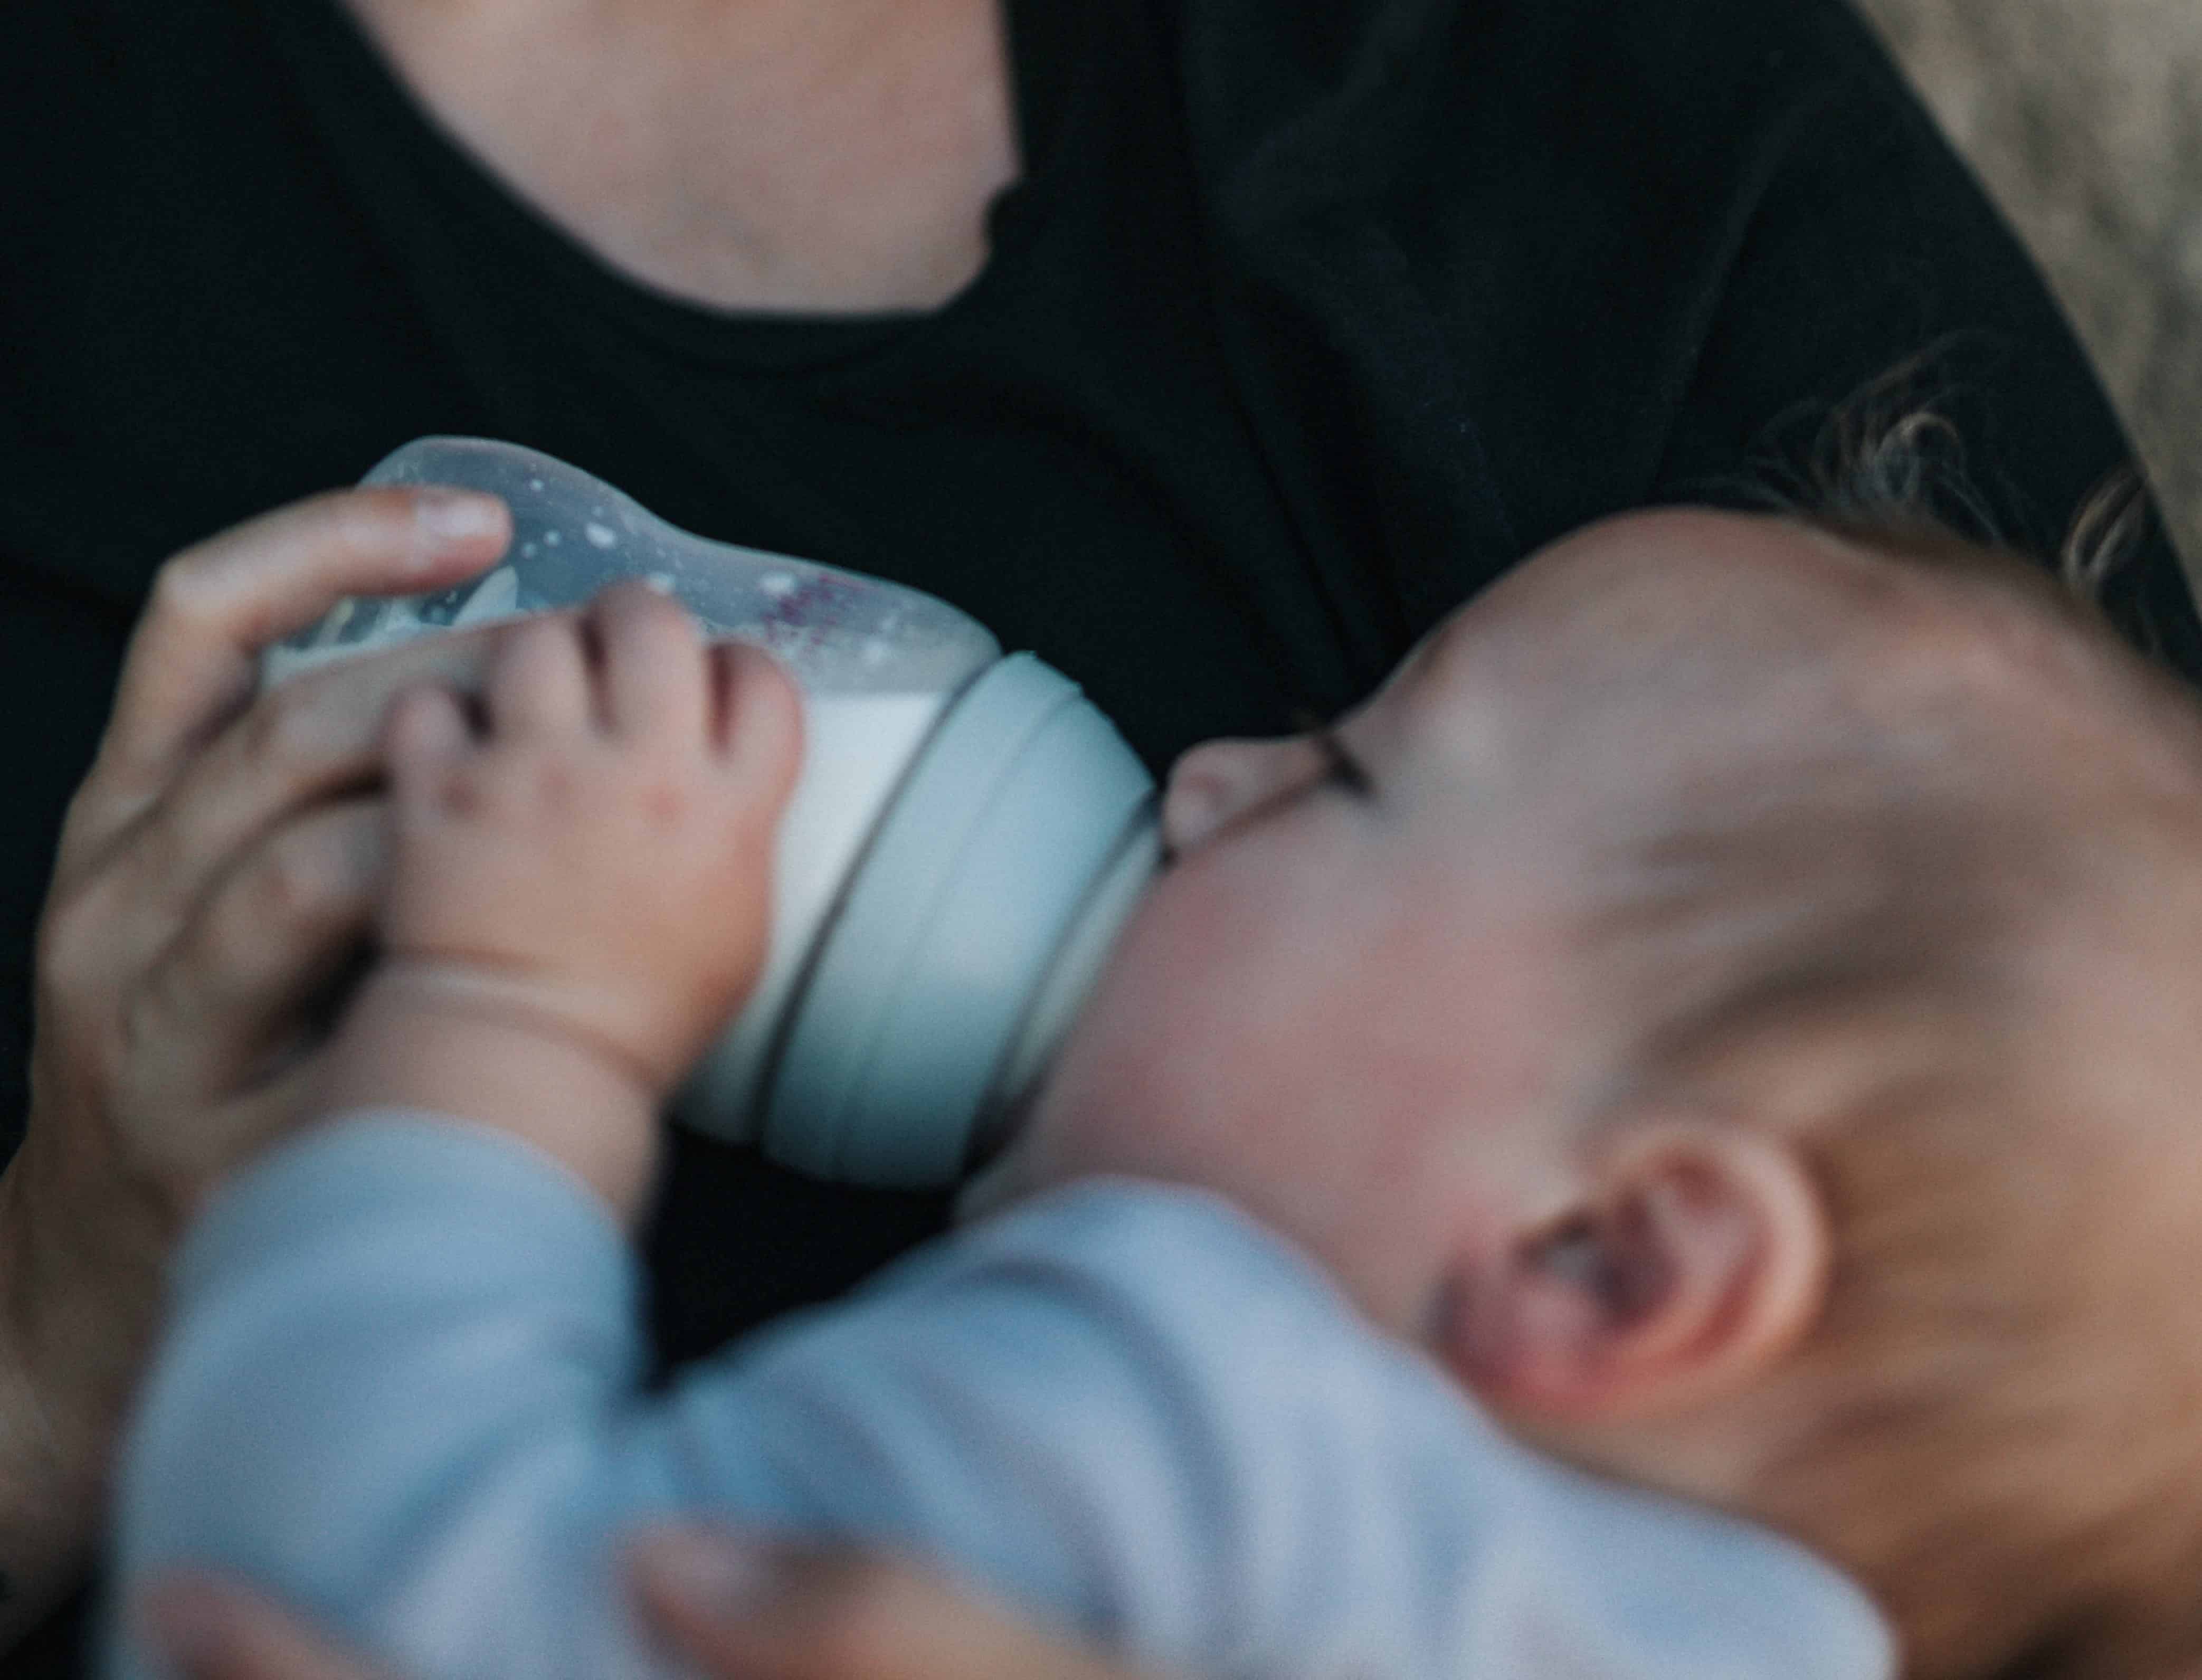 Baby feeding on breast milk is very important